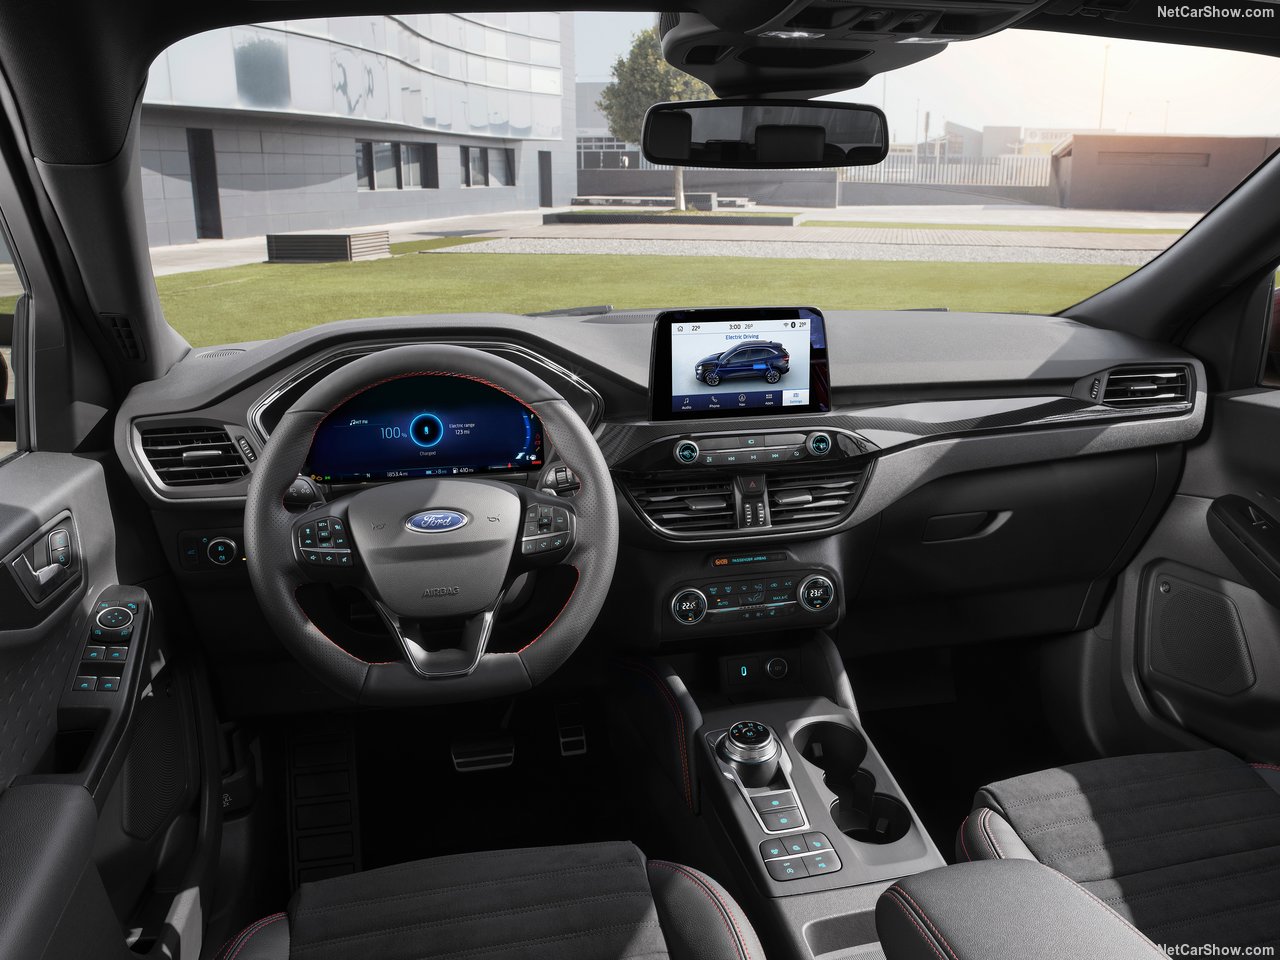 2019 Ford Kuga resmen tanıtıldı: Daha hafif ve daha sportif